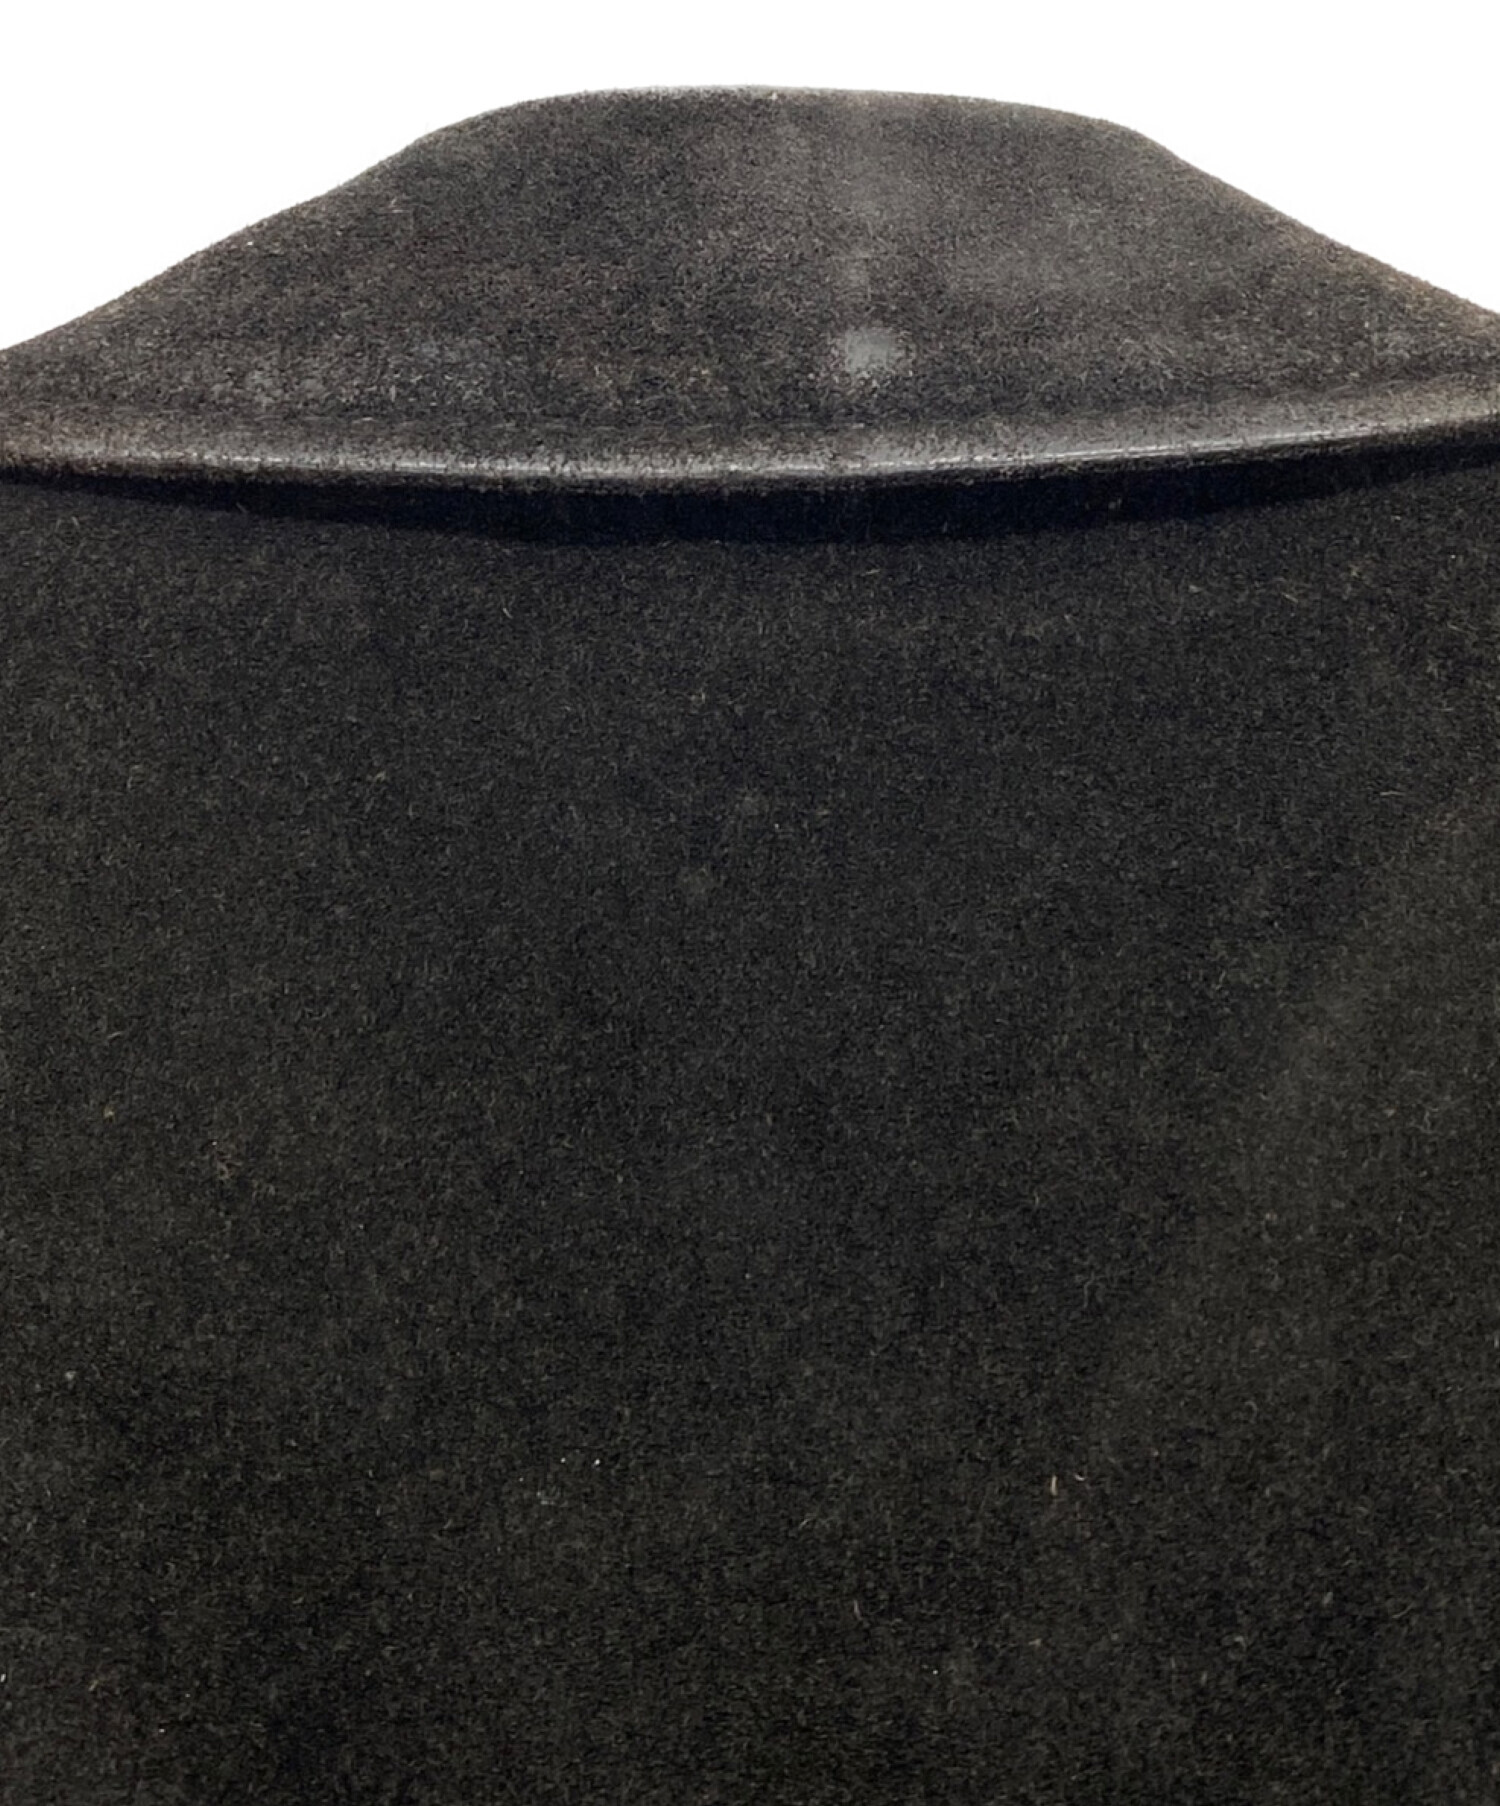 Schott (ショット) スウェードジャケット ブラック サイズ:38